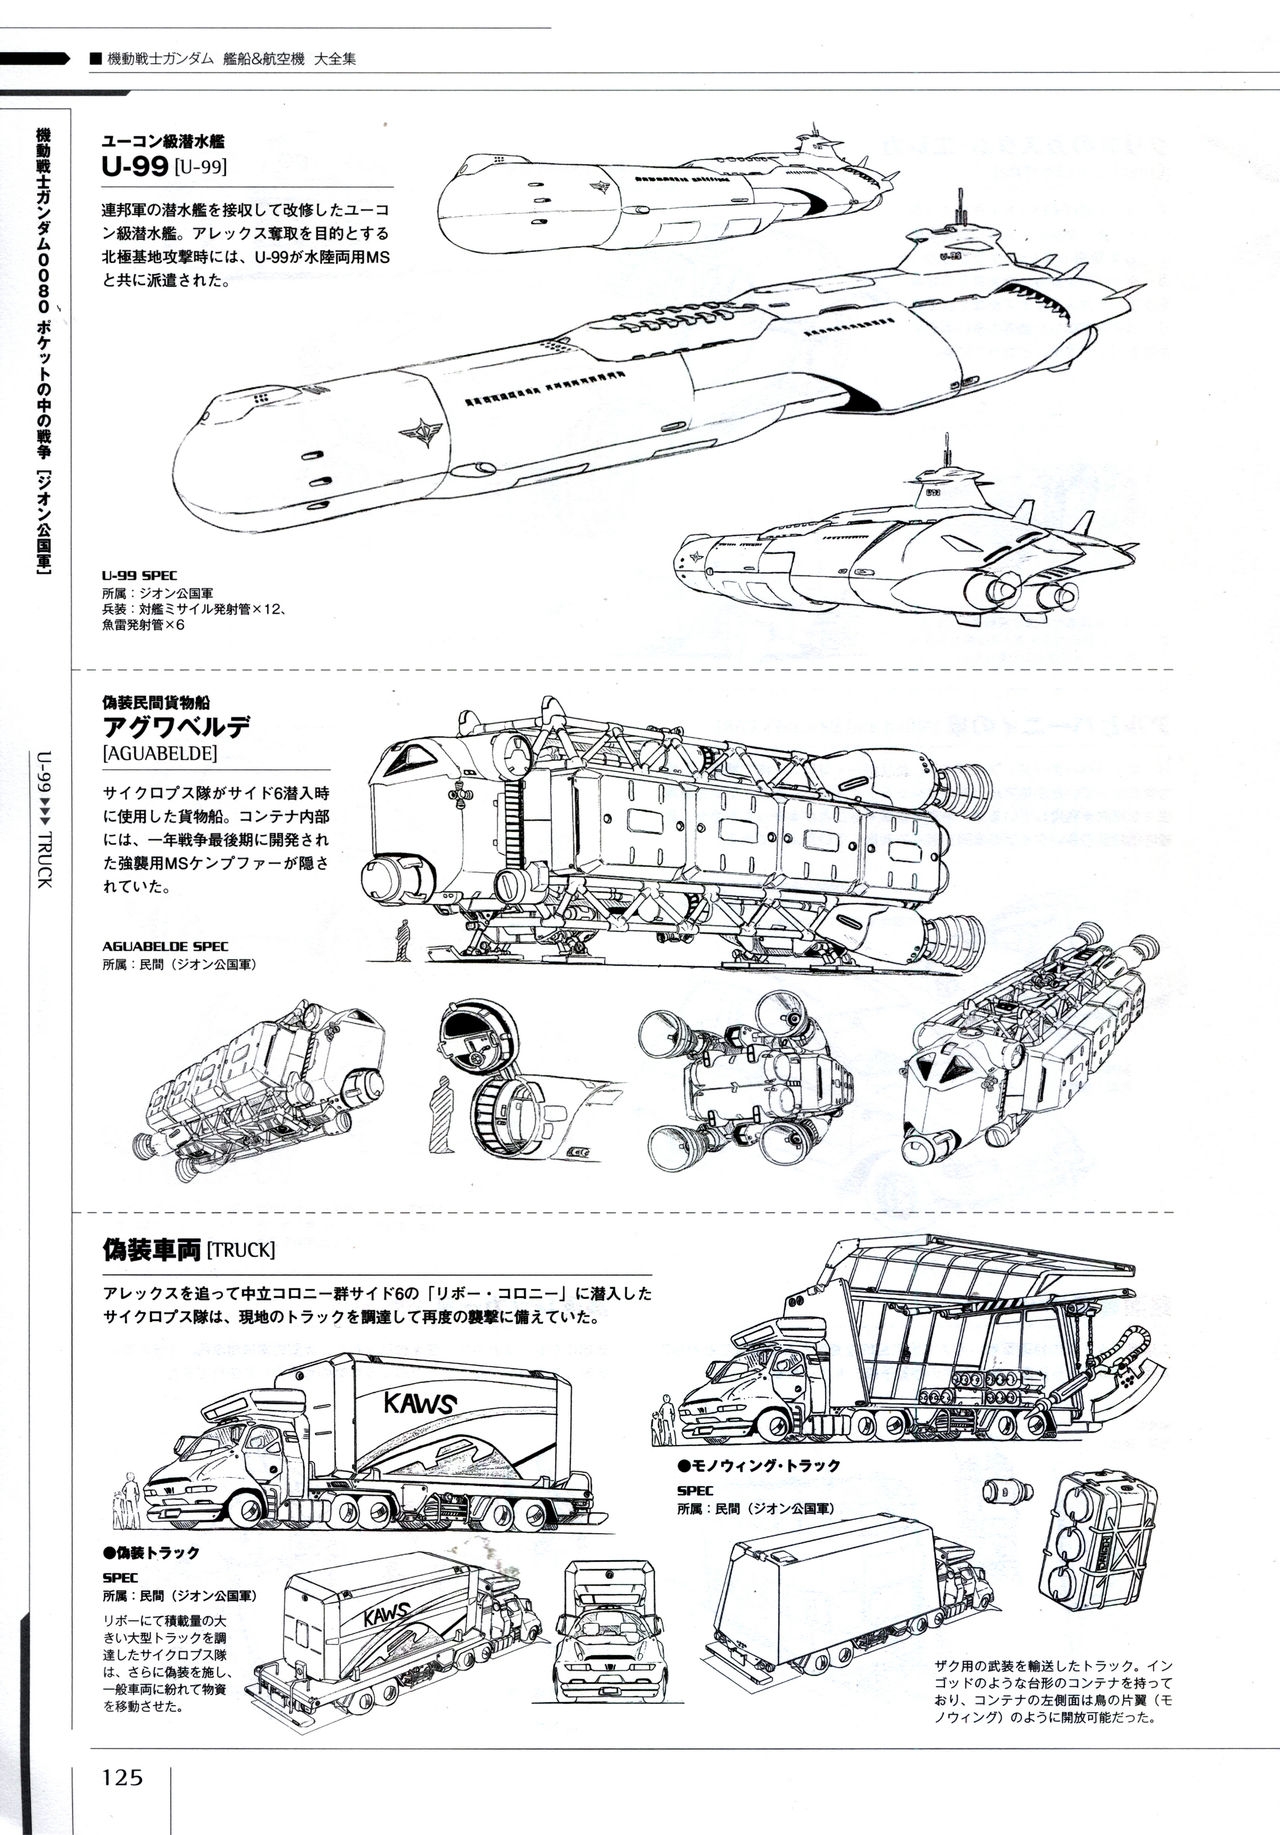 Mobile Suit Gundam - Ship & Aerospace Plane Encyclopedia - Revised Edition 130